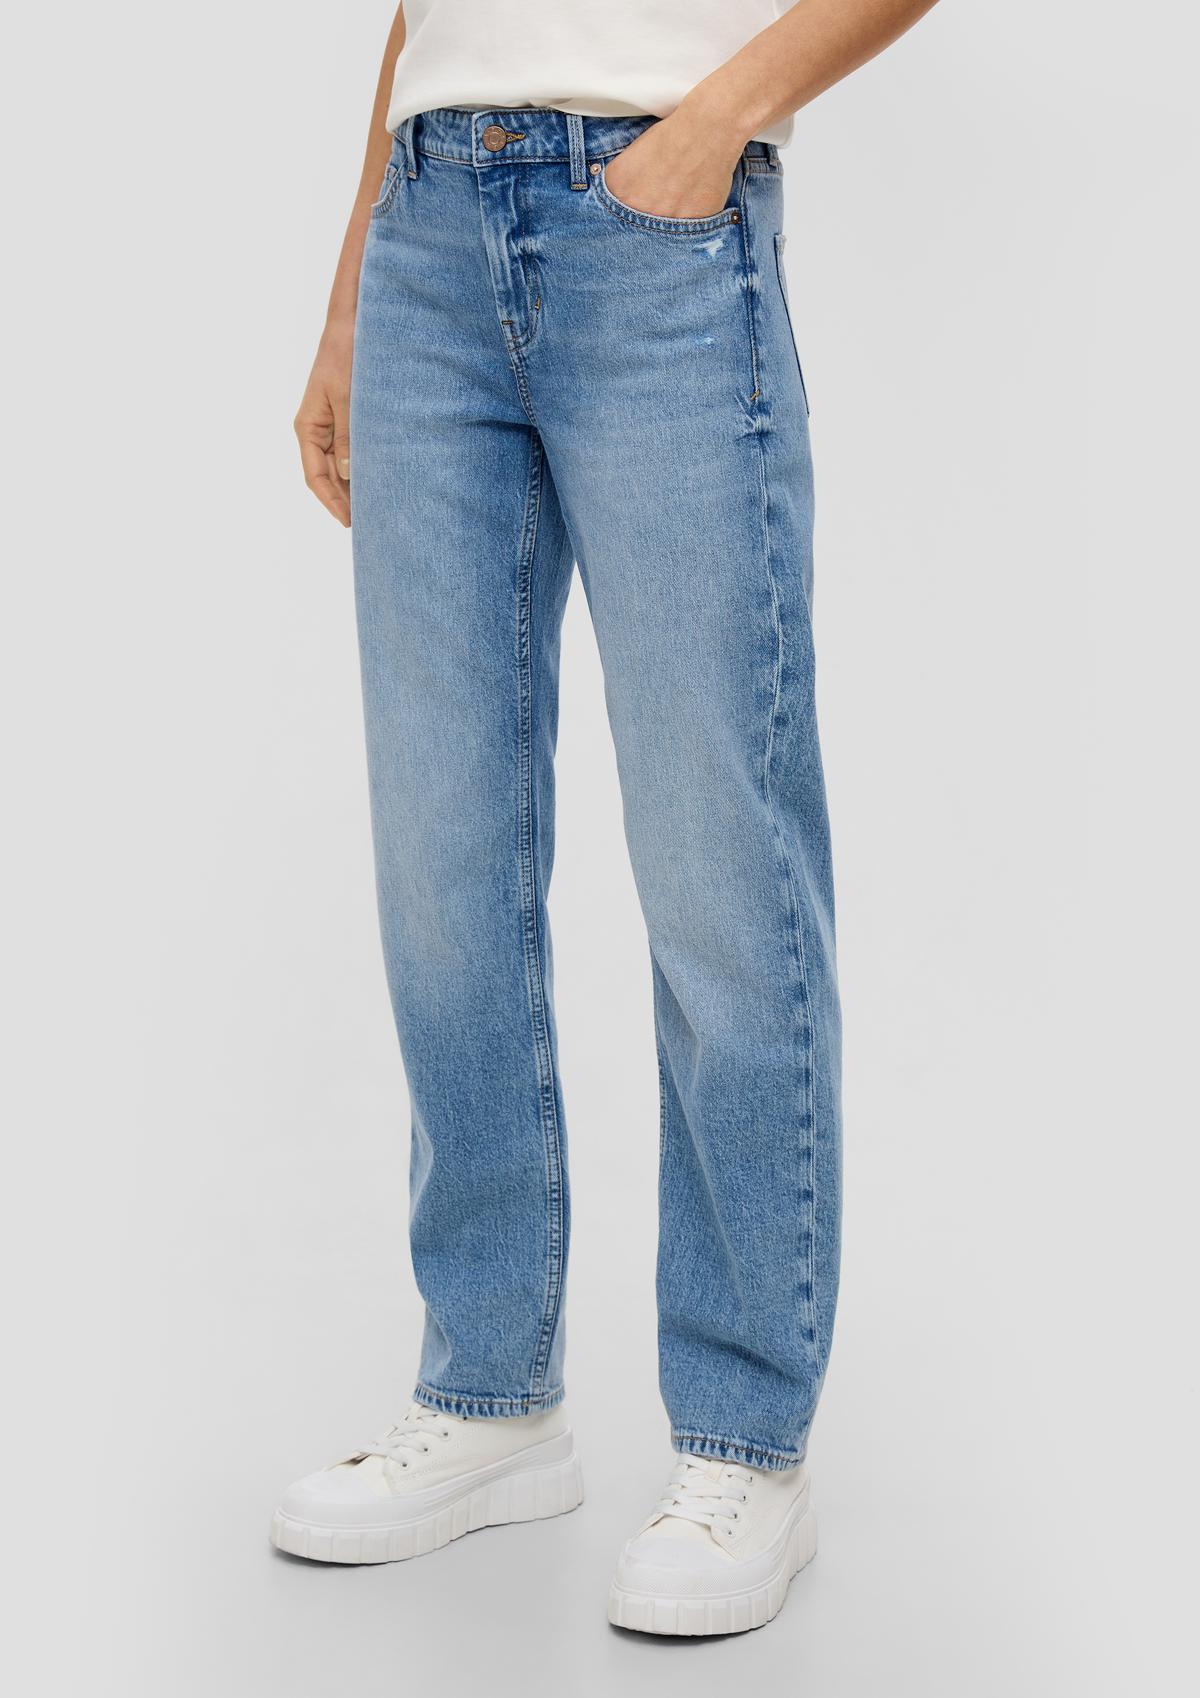 s.Oliver Karolin jeans / regular fit / mid rise / straight leg